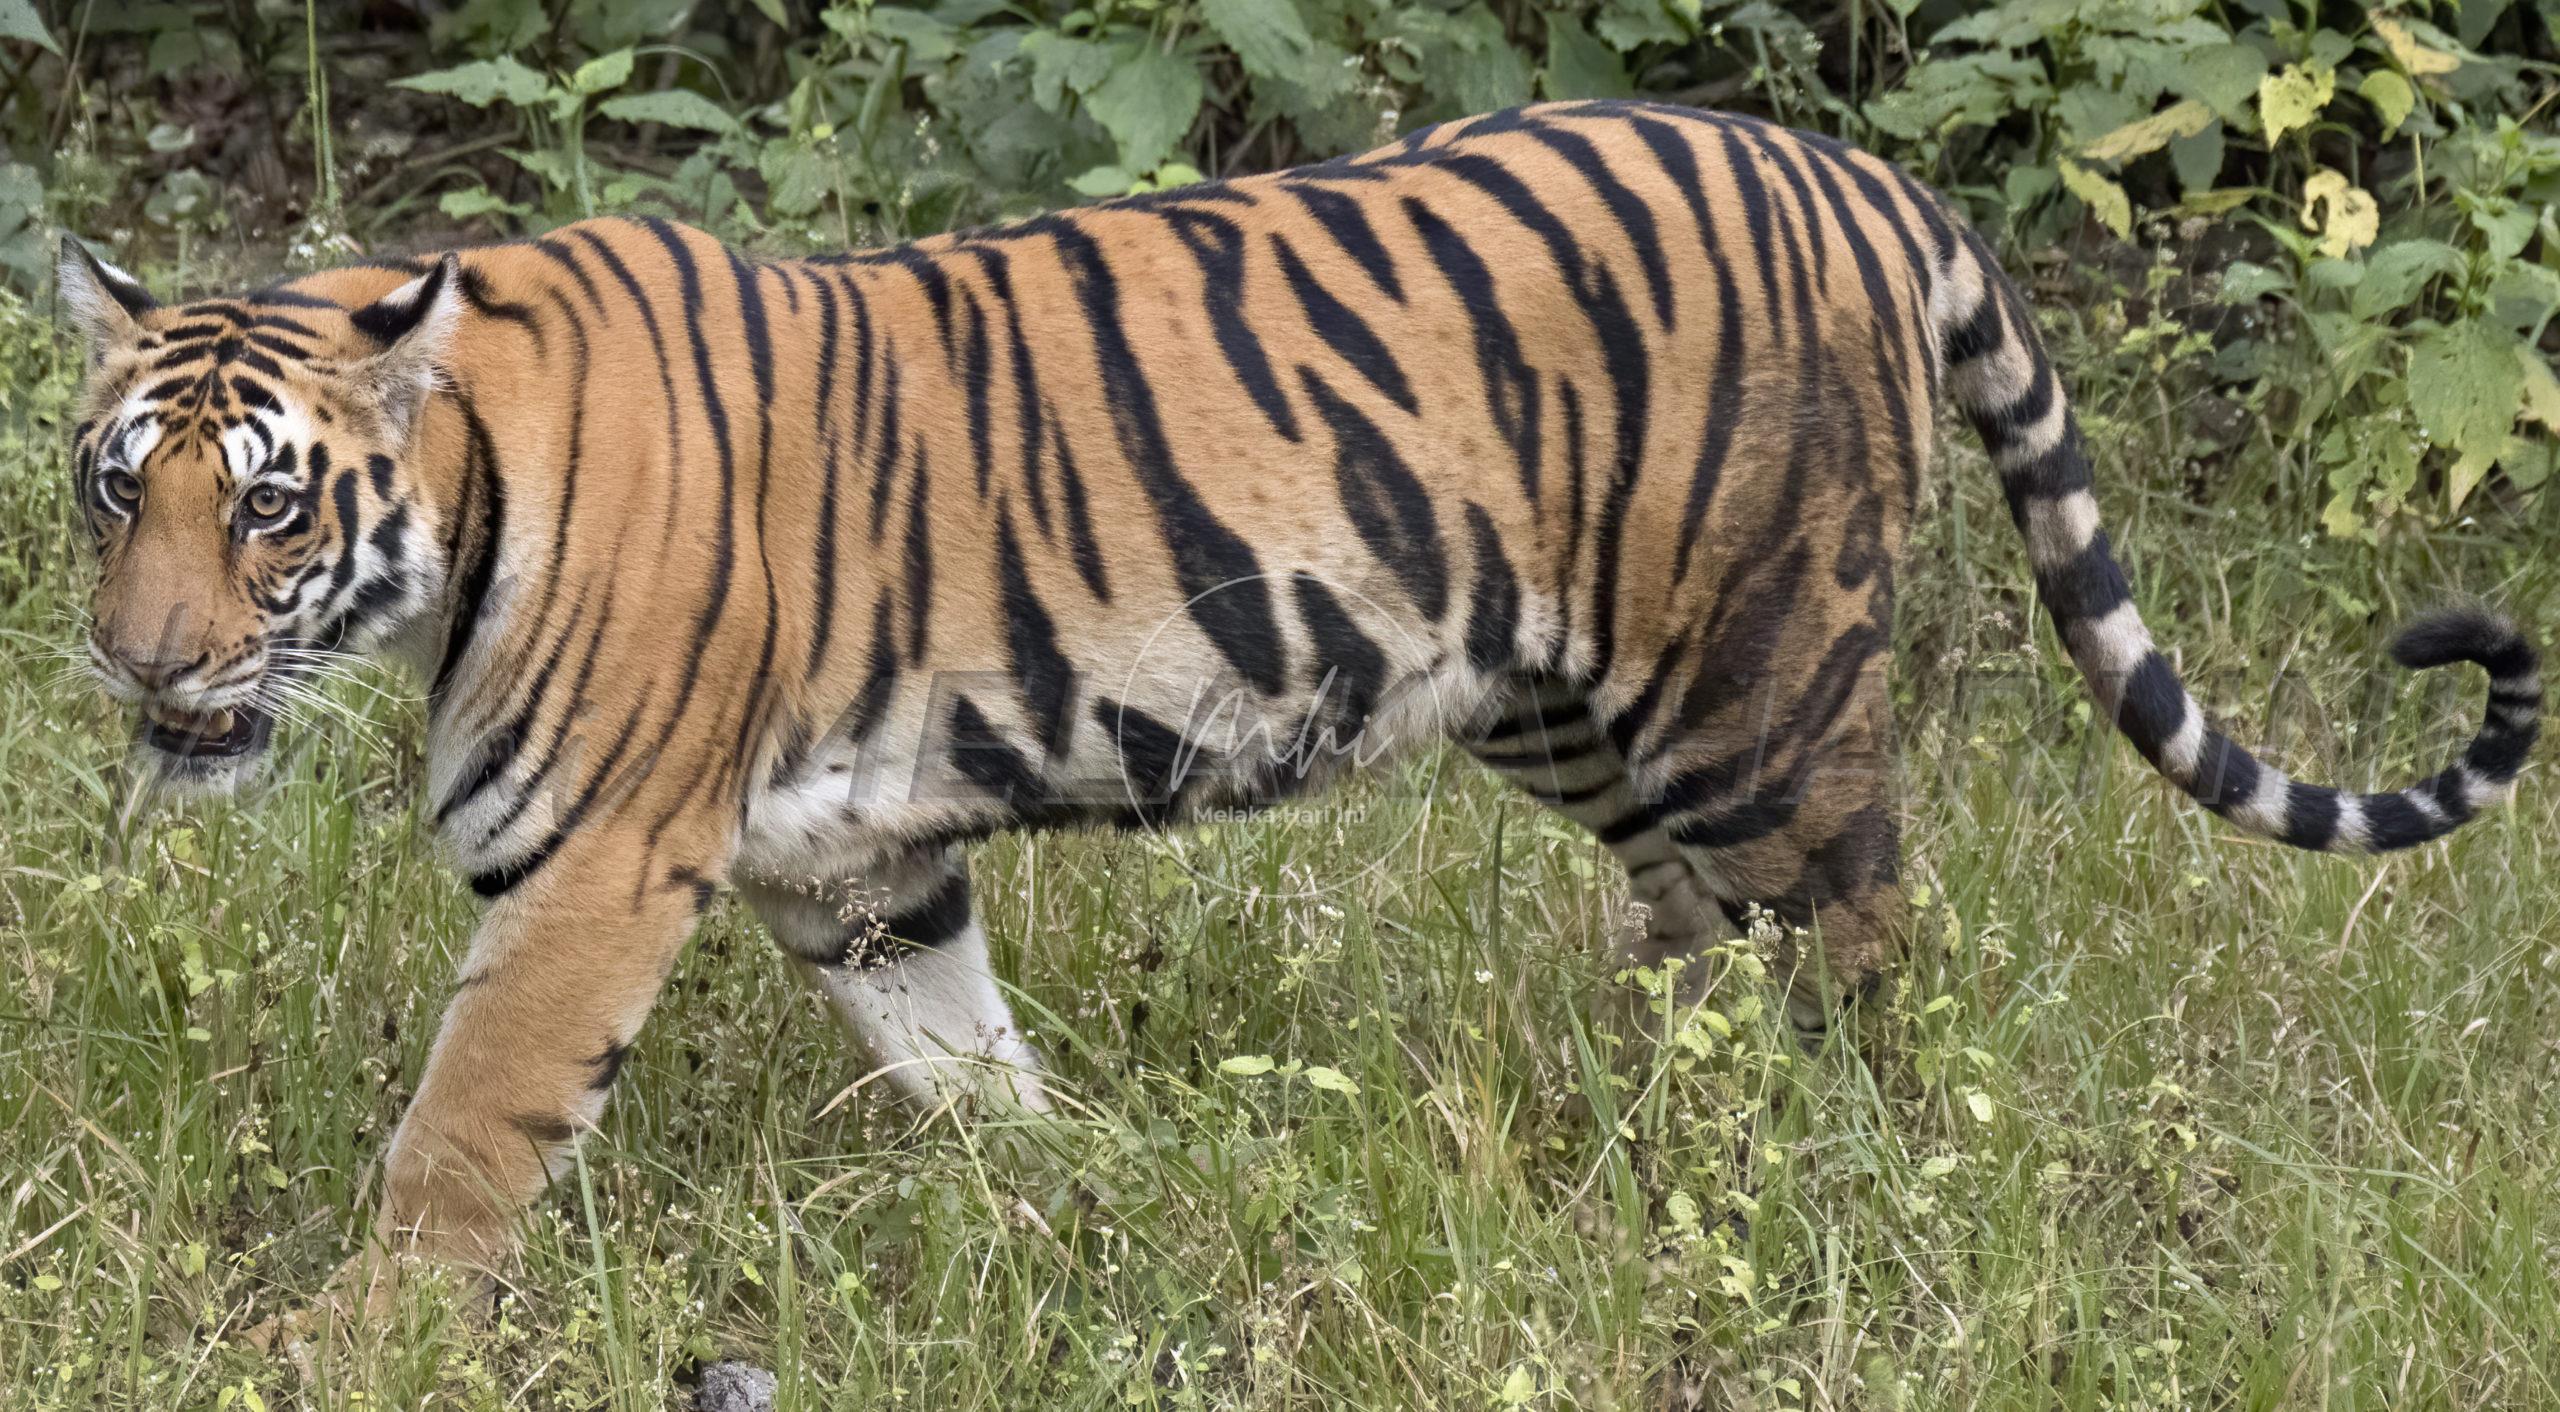 Harimau didakwa berkeliaran di Kemensah Heights masih belum ditemui